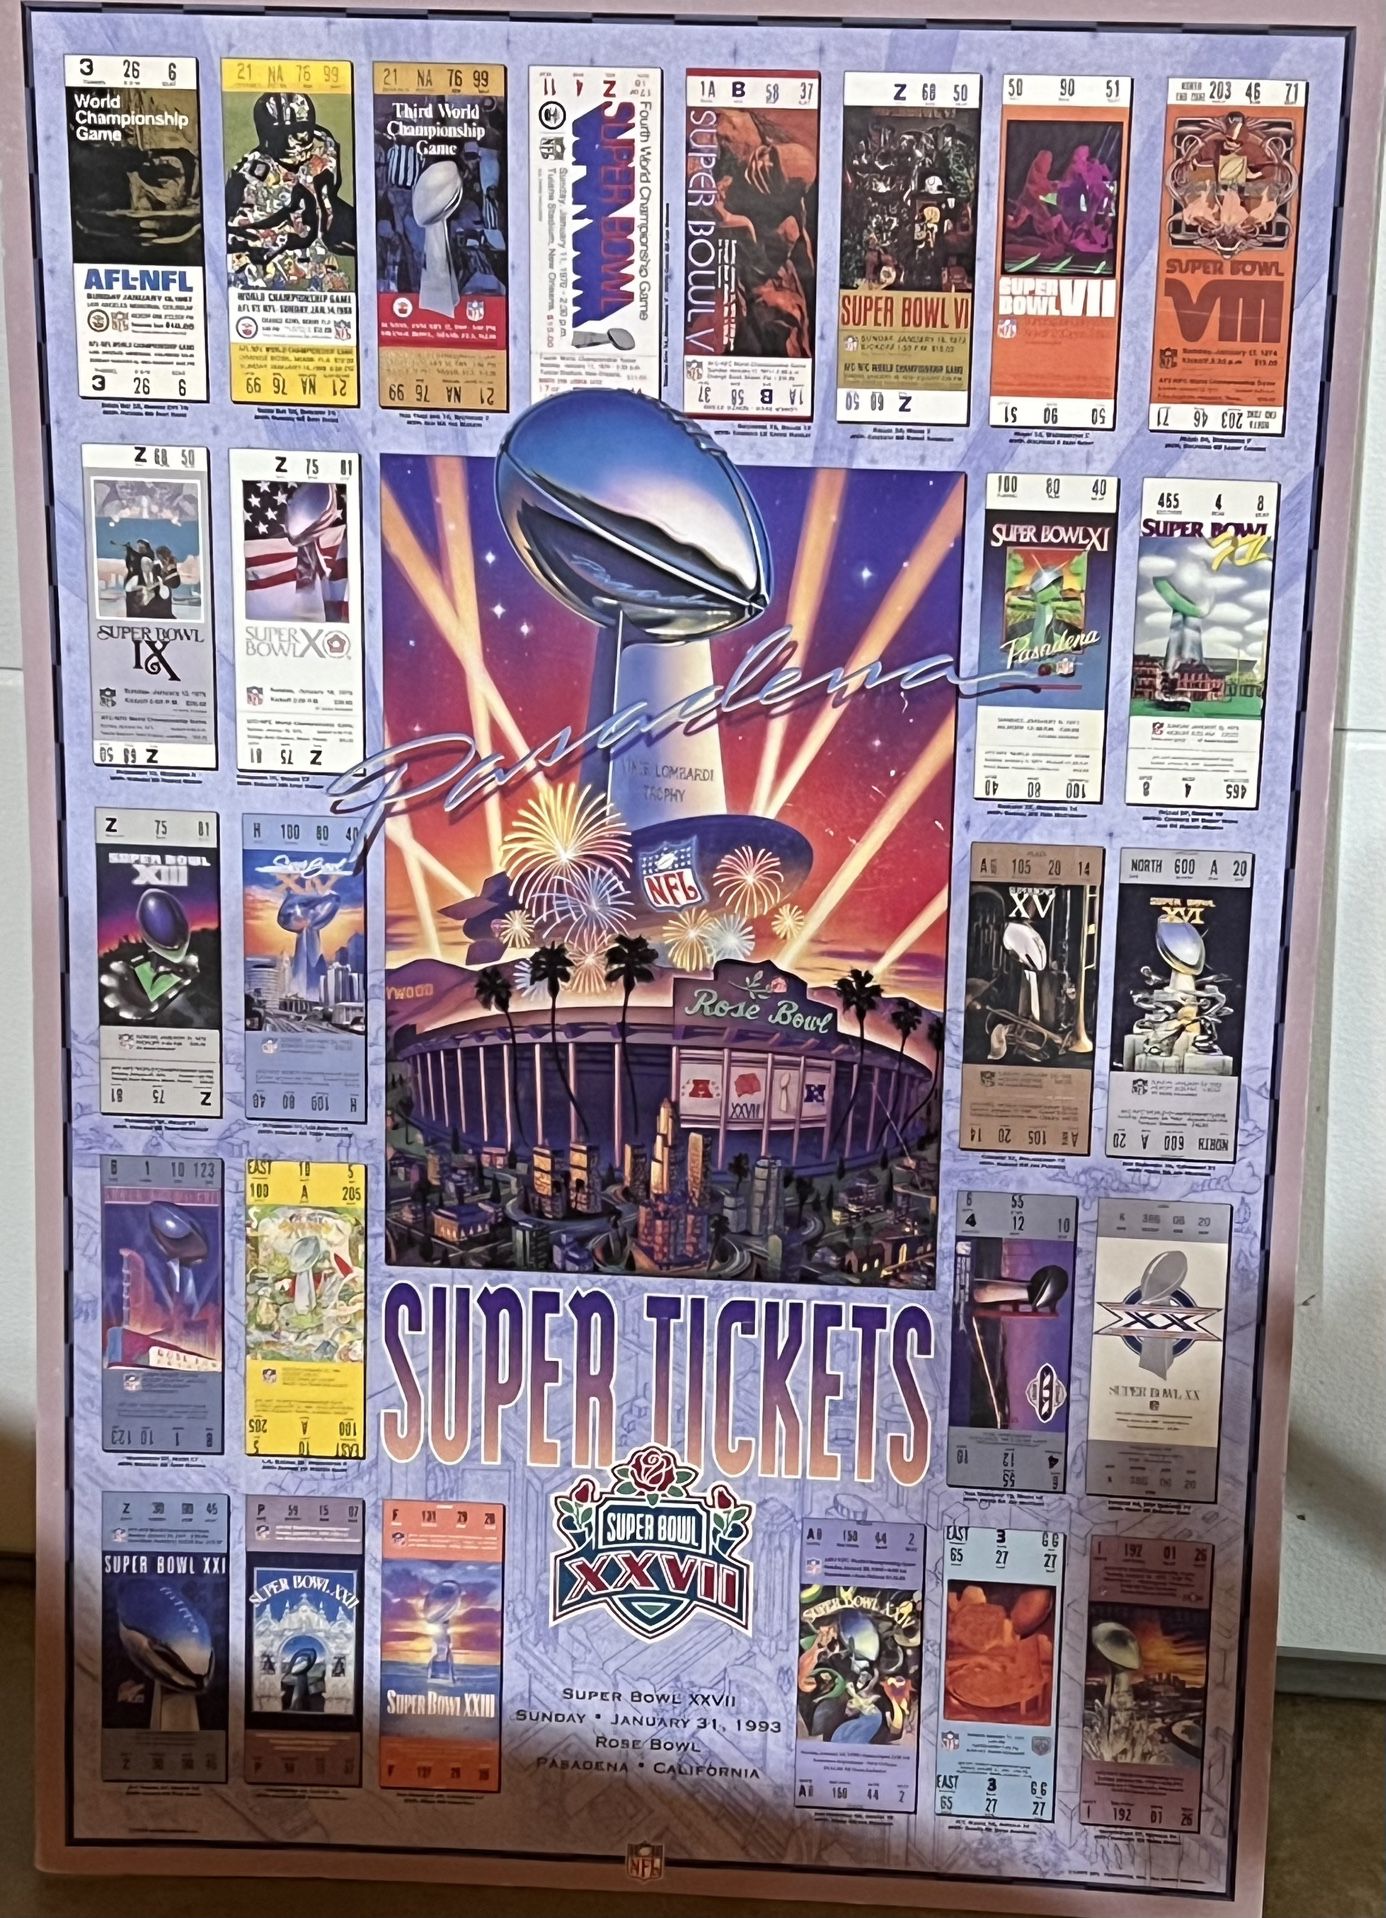 Super Bowl XXVII Super Tickets Poster